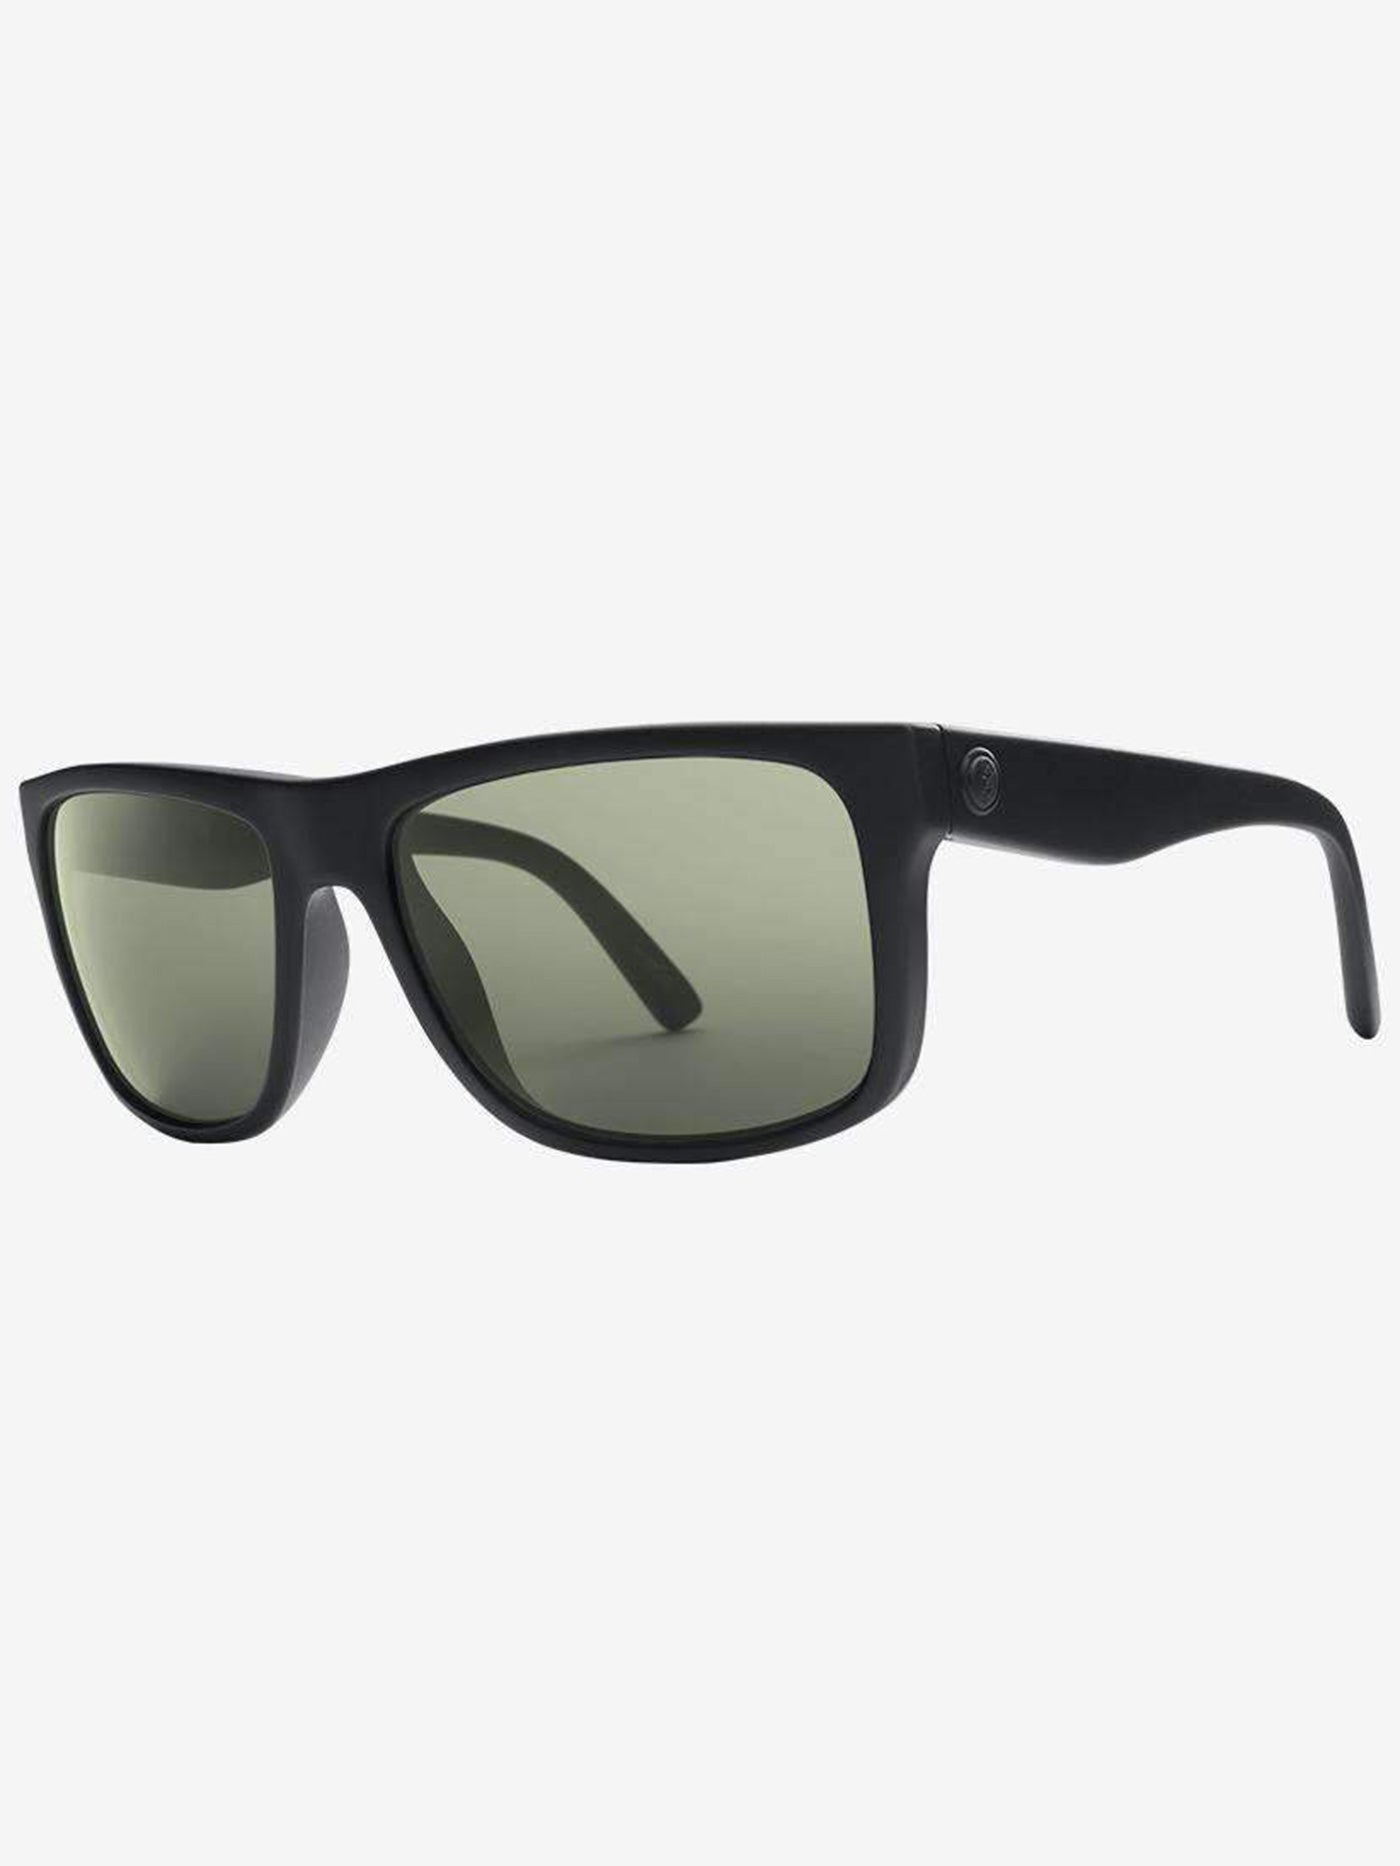 Electric Swingarm Matte Black Polarized Sunglasses